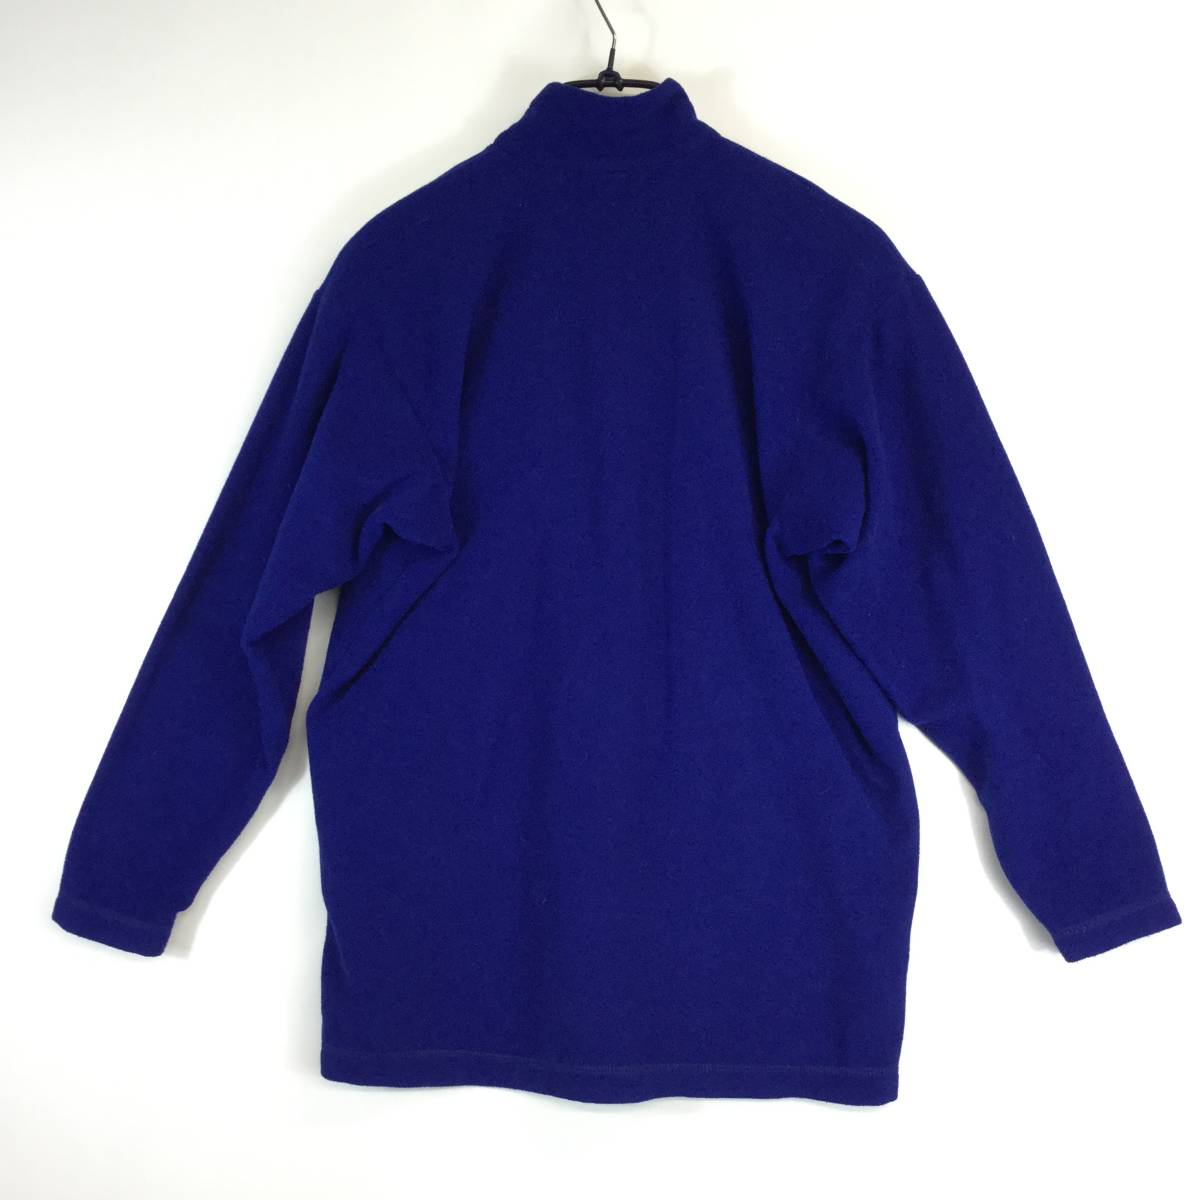 90s Italy made Jack Wolfskin JACK WOLFSKIN half Zip fleece shirt blue M size 